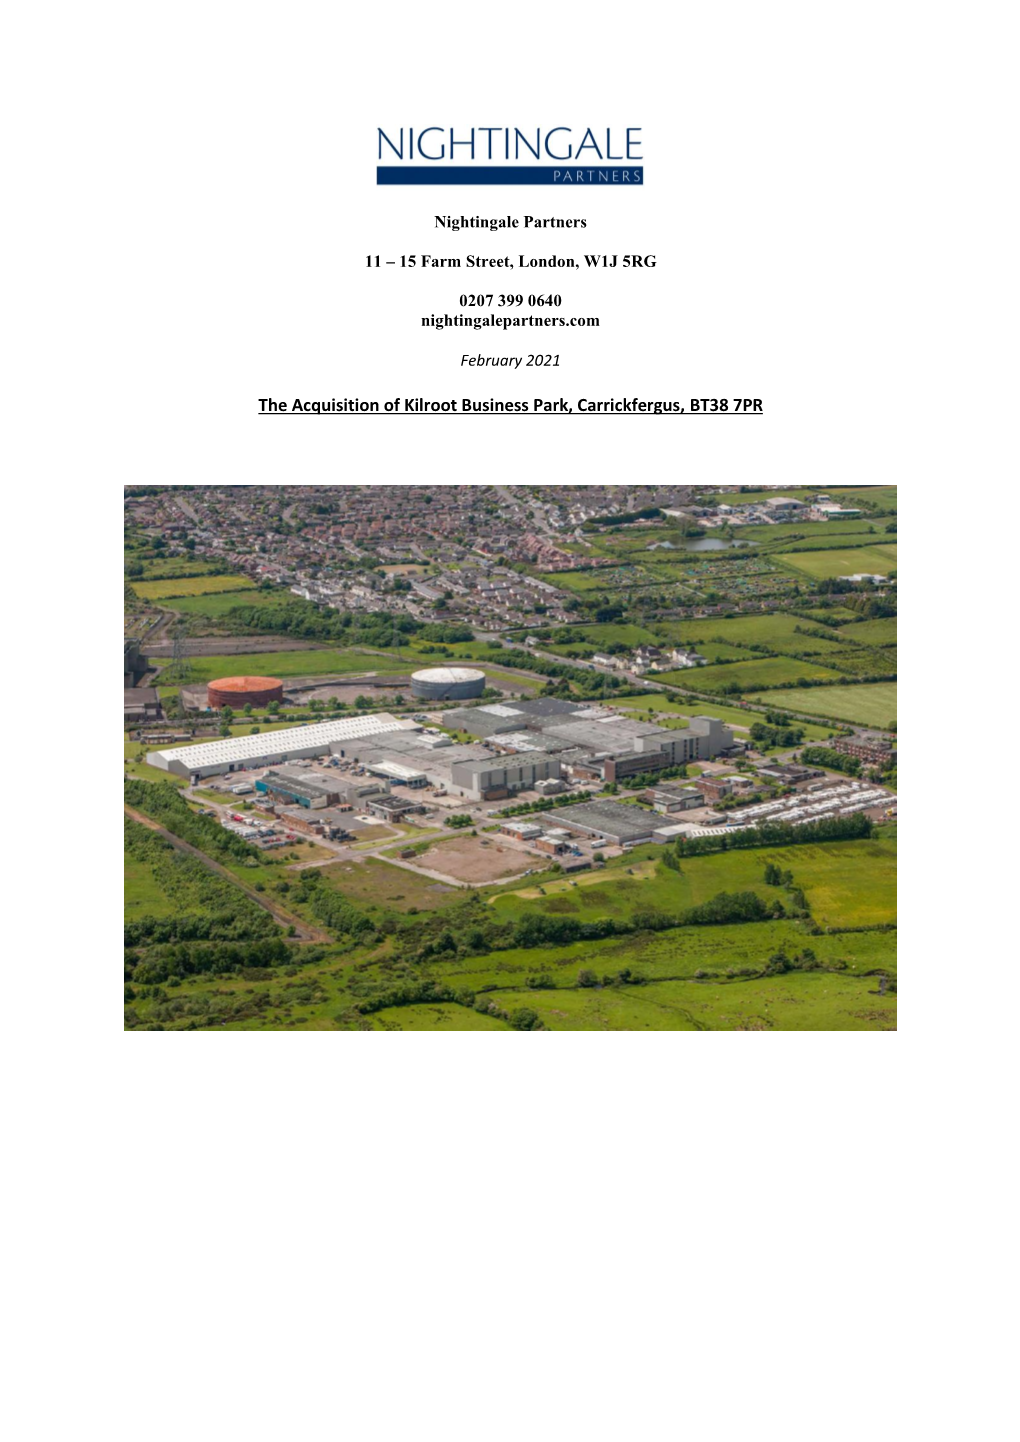 The Acquisition of Kilroot Business Park, Carrickfergus, BT38 7PR